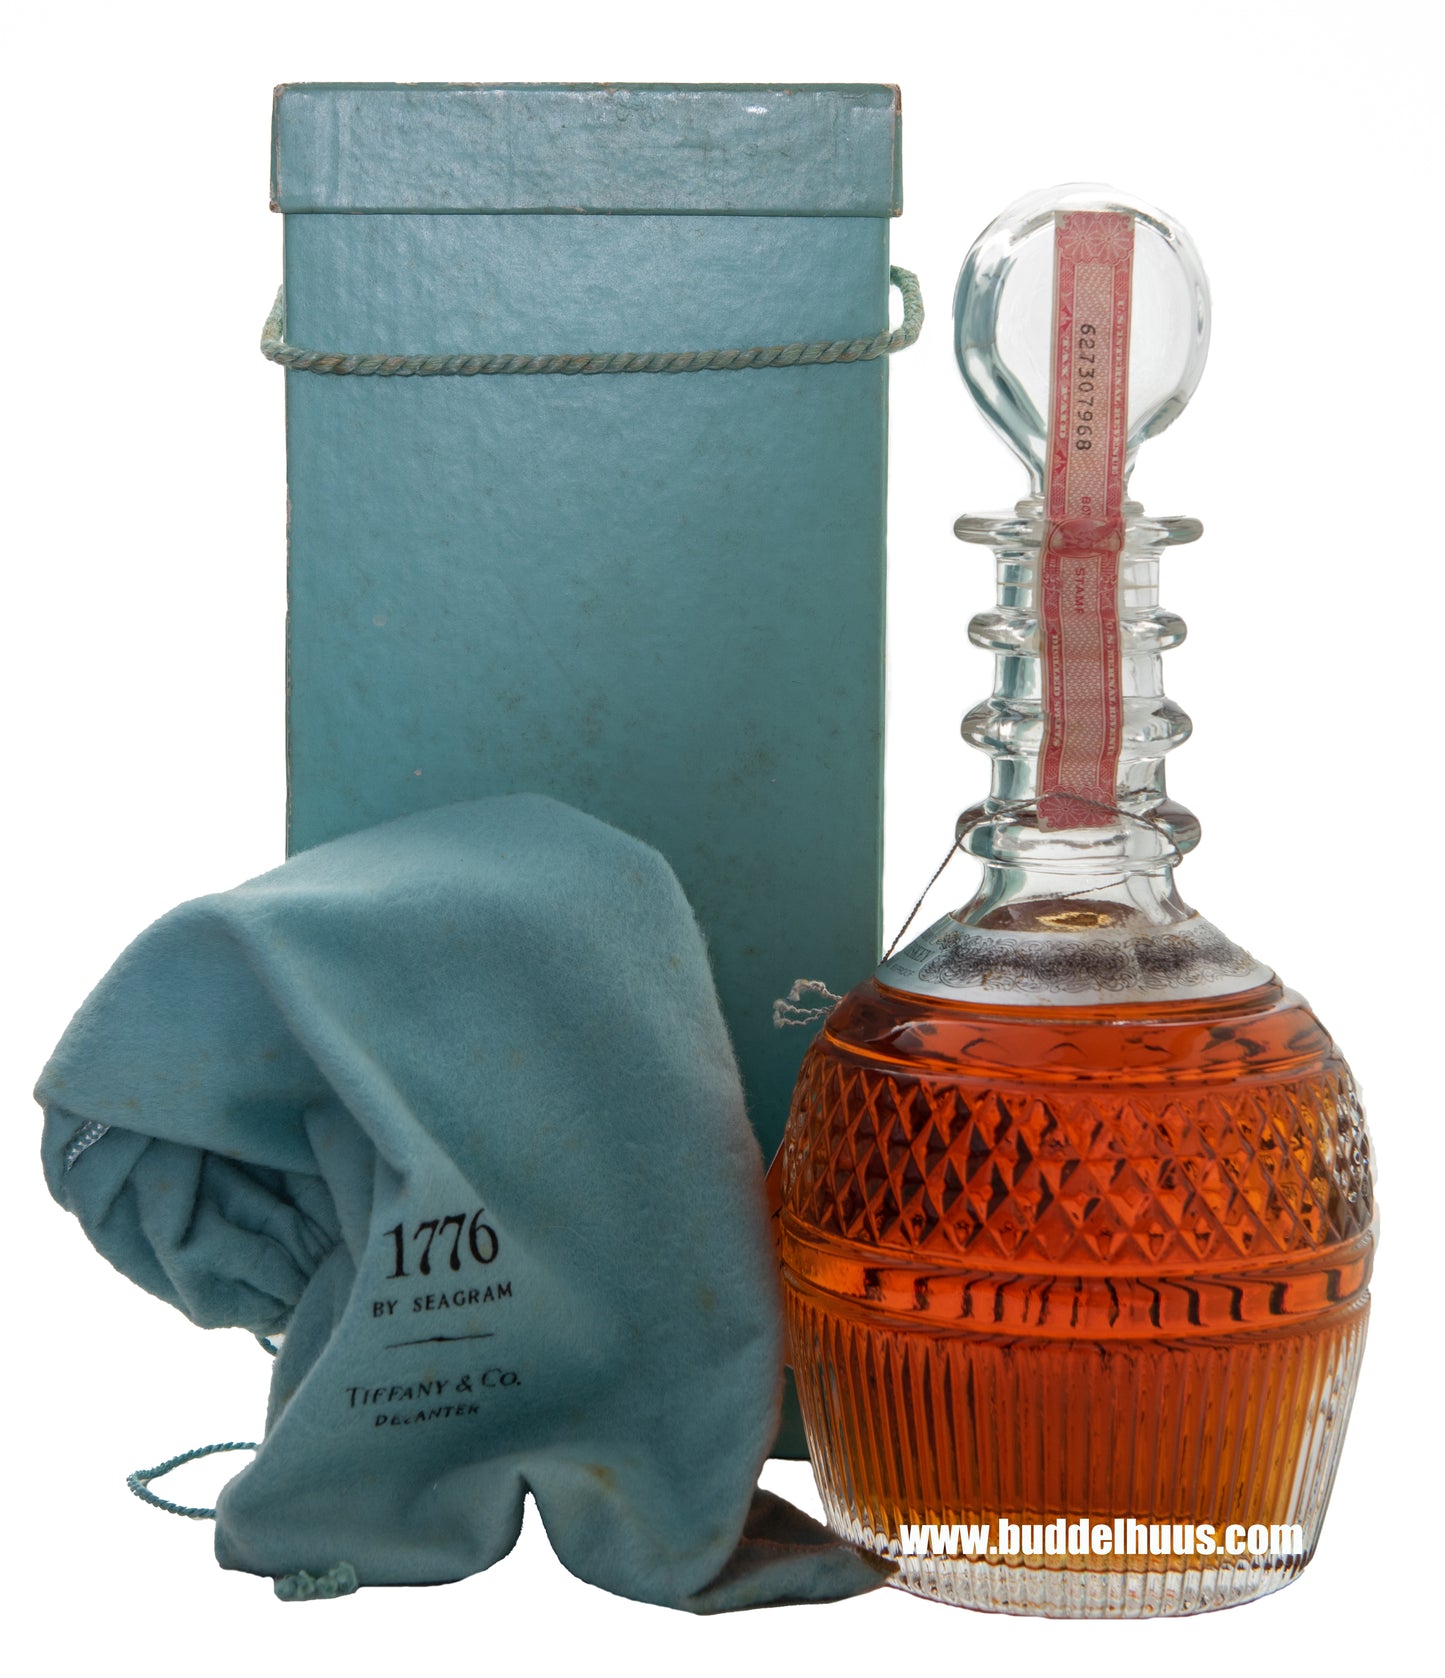 Seagram's 1776 Premium American Whiskey in Tiffany Decanter (1976)